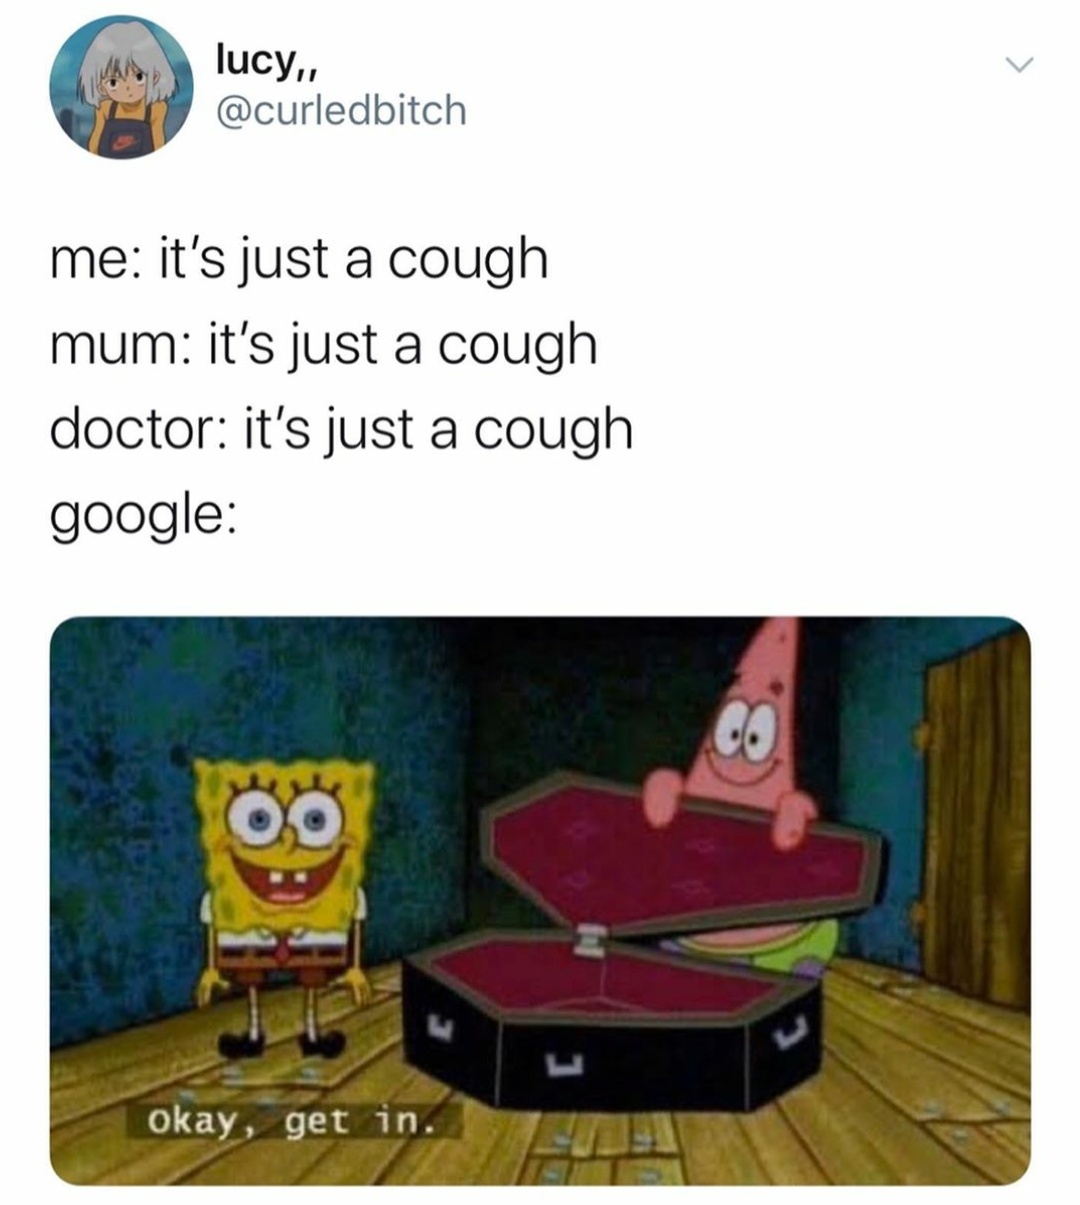 okay get in meme - lucy., me it's just a cough mum it's just a cough doctor it's just a cough google okay, get in.